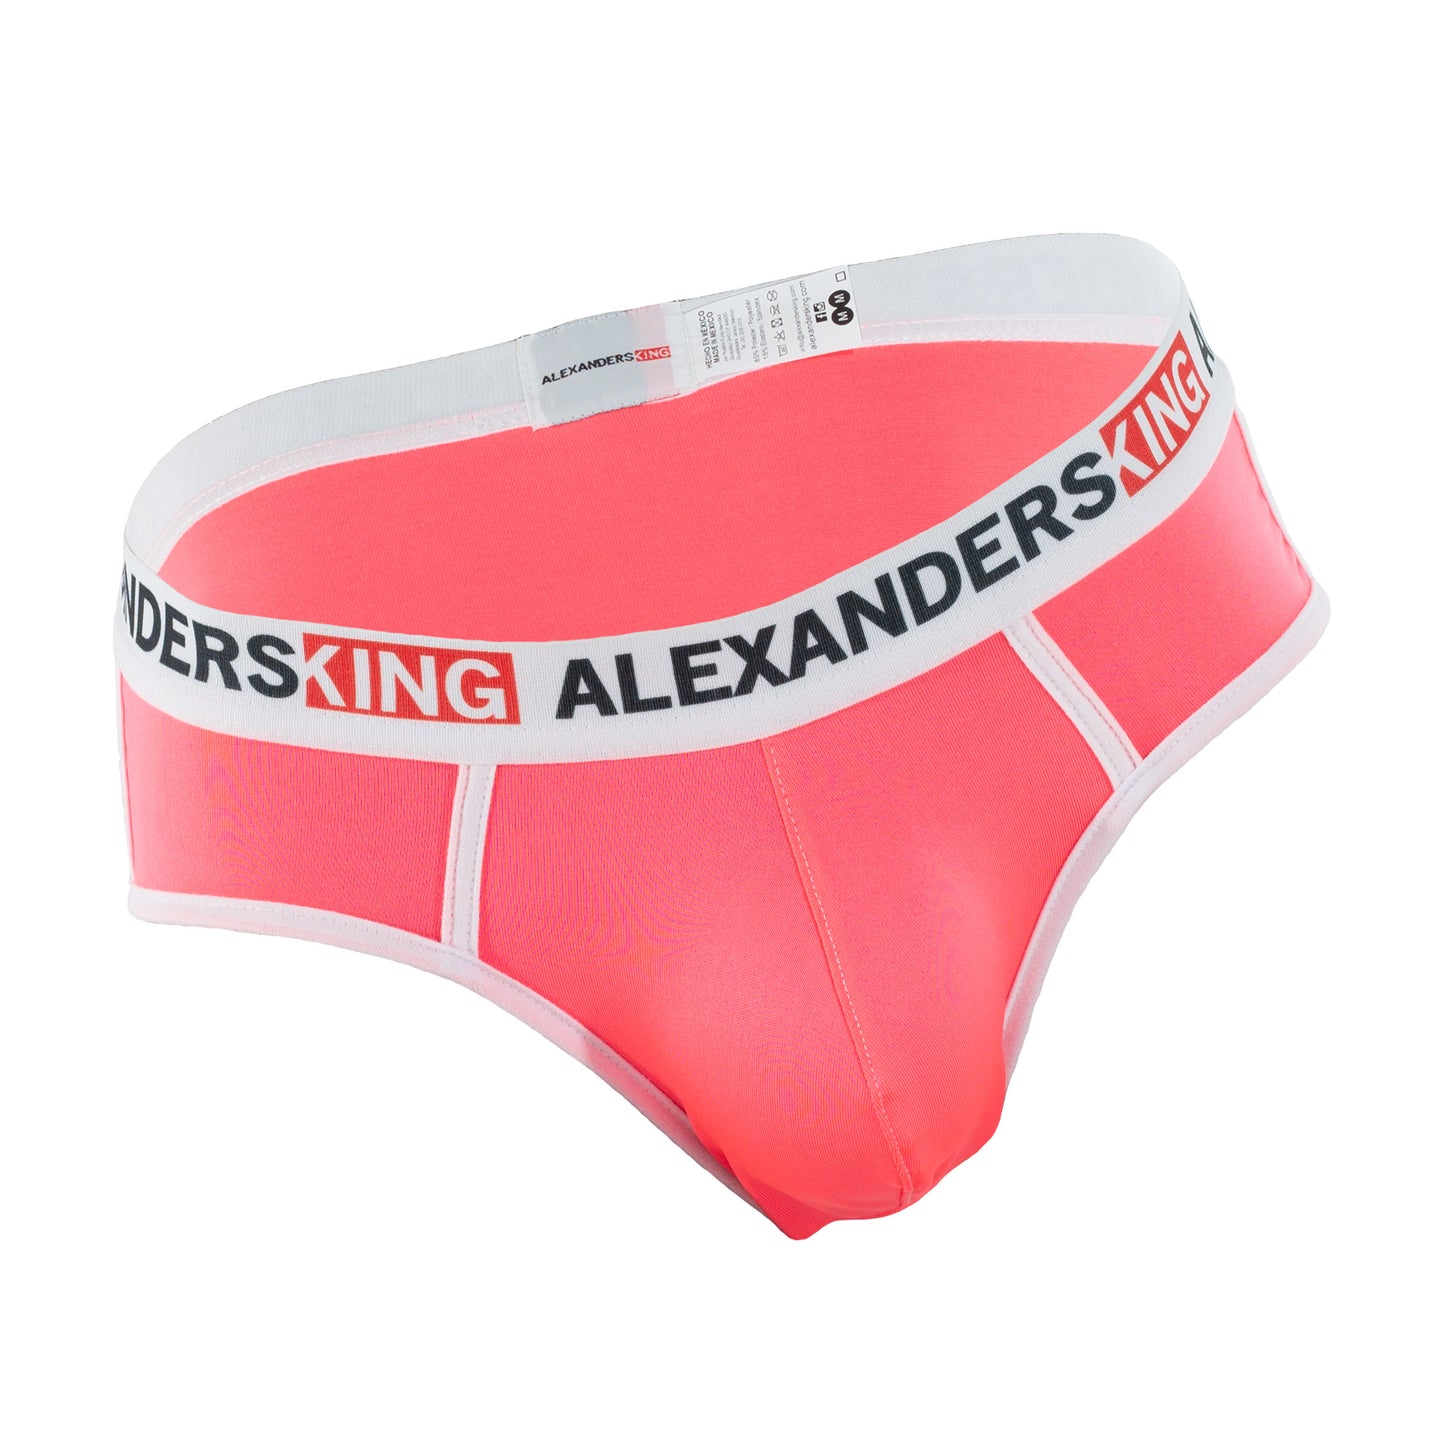 TP0129 Pink Neon Brief Skinit Alexanders King